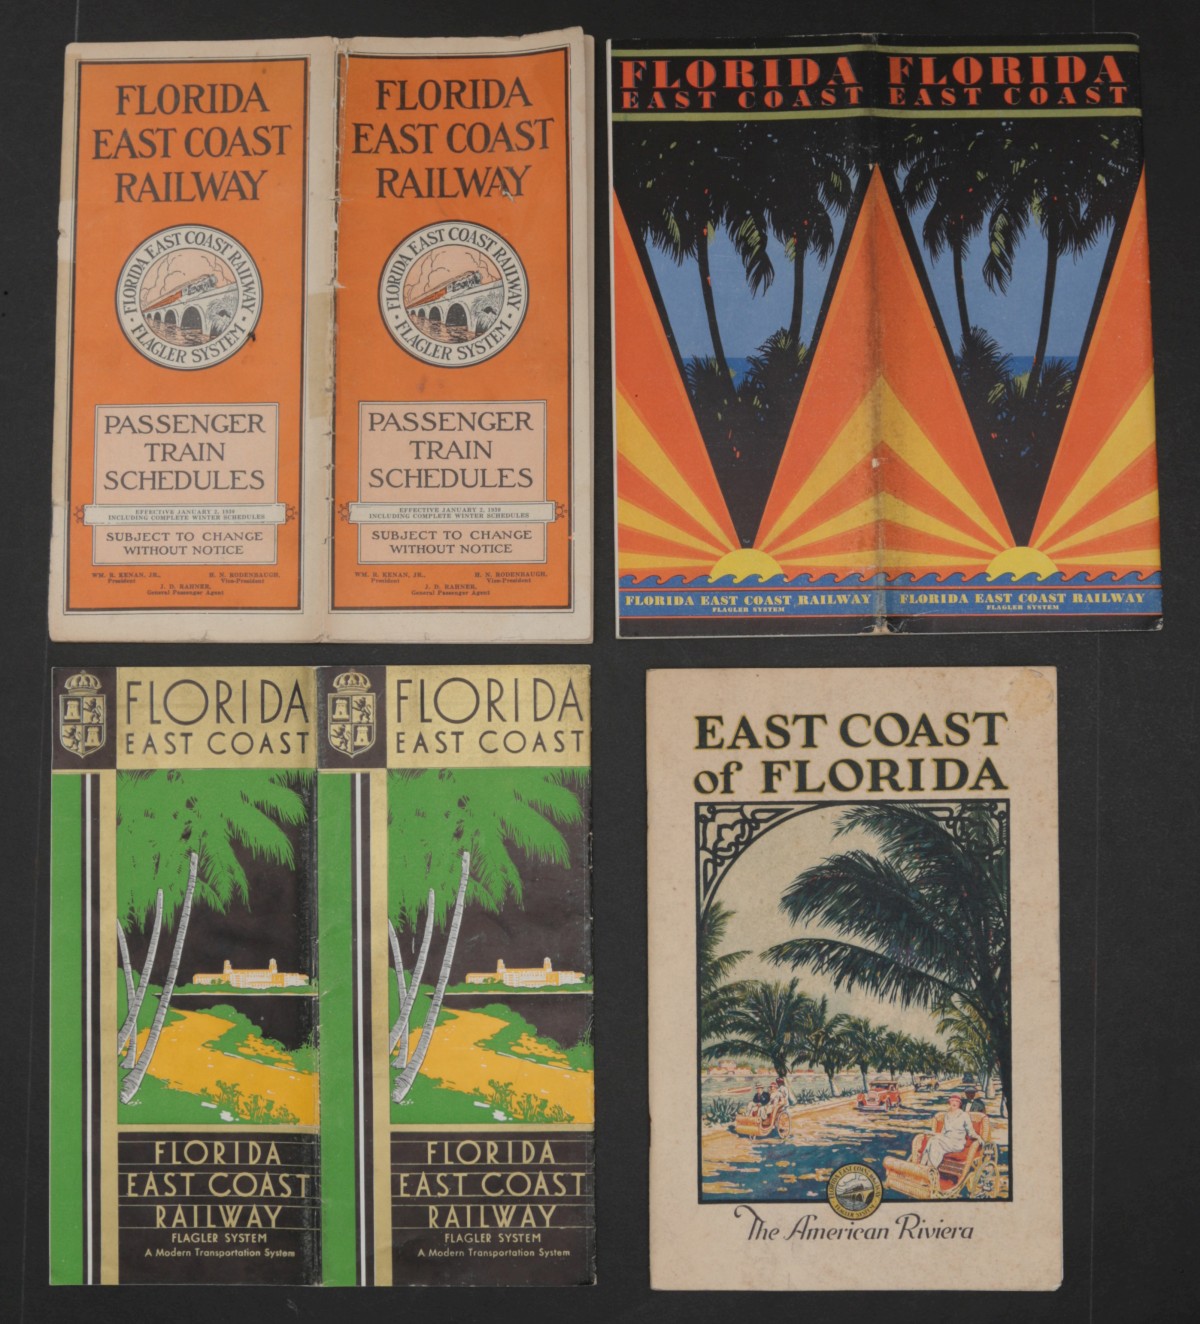 TEN PIECES OF FLORIDA EAST COAST RAILWAY EPHEMERA